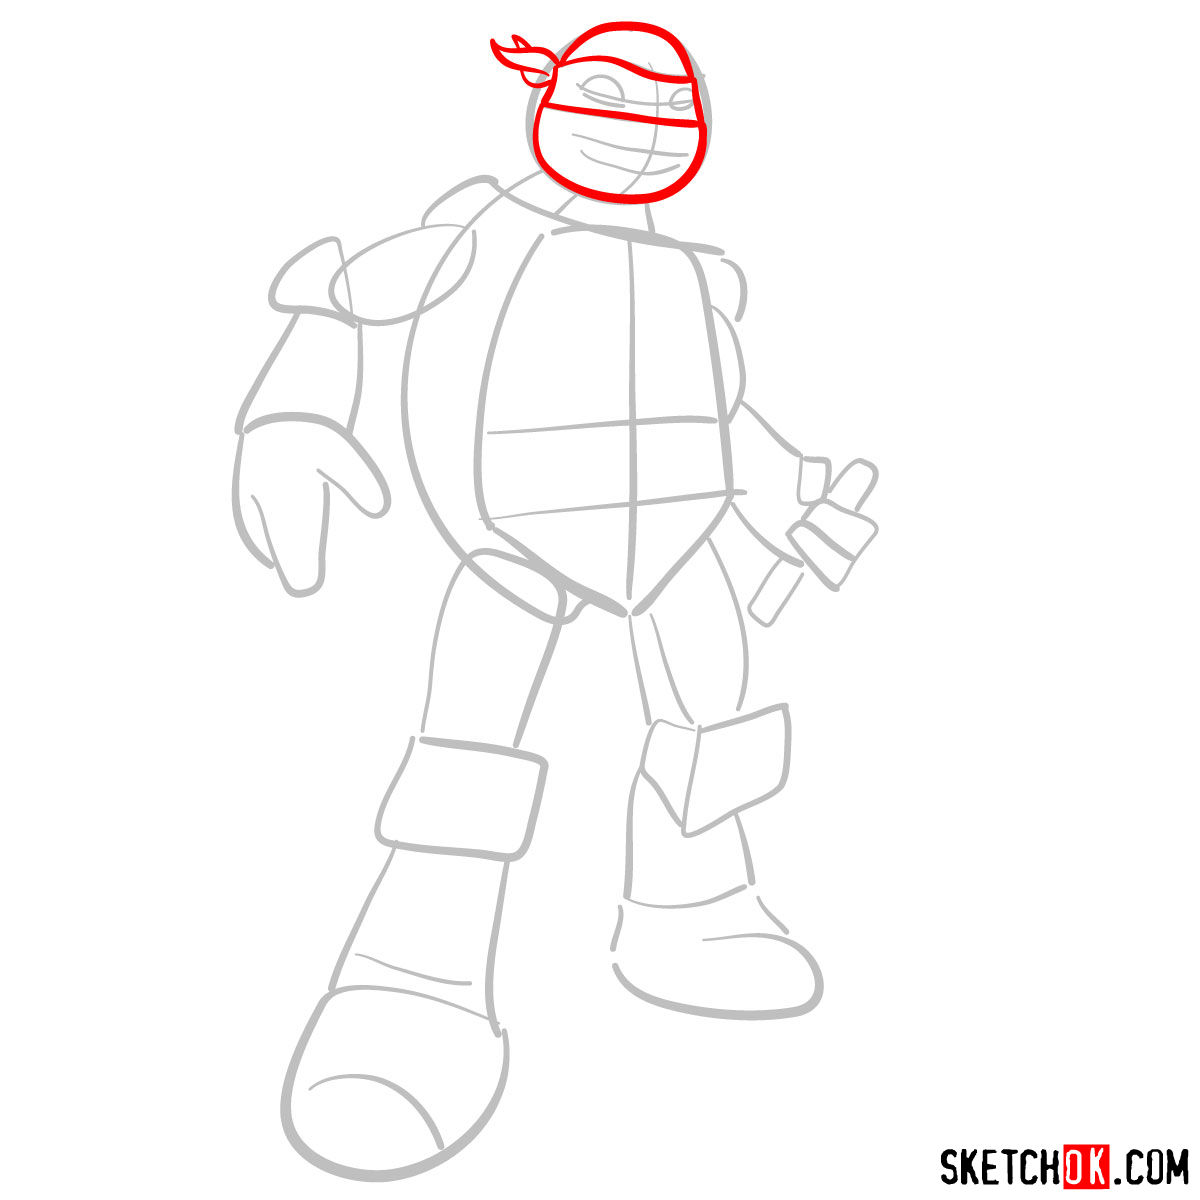 How to draw Michaelangelo ninja turtle cartoon style - step 03